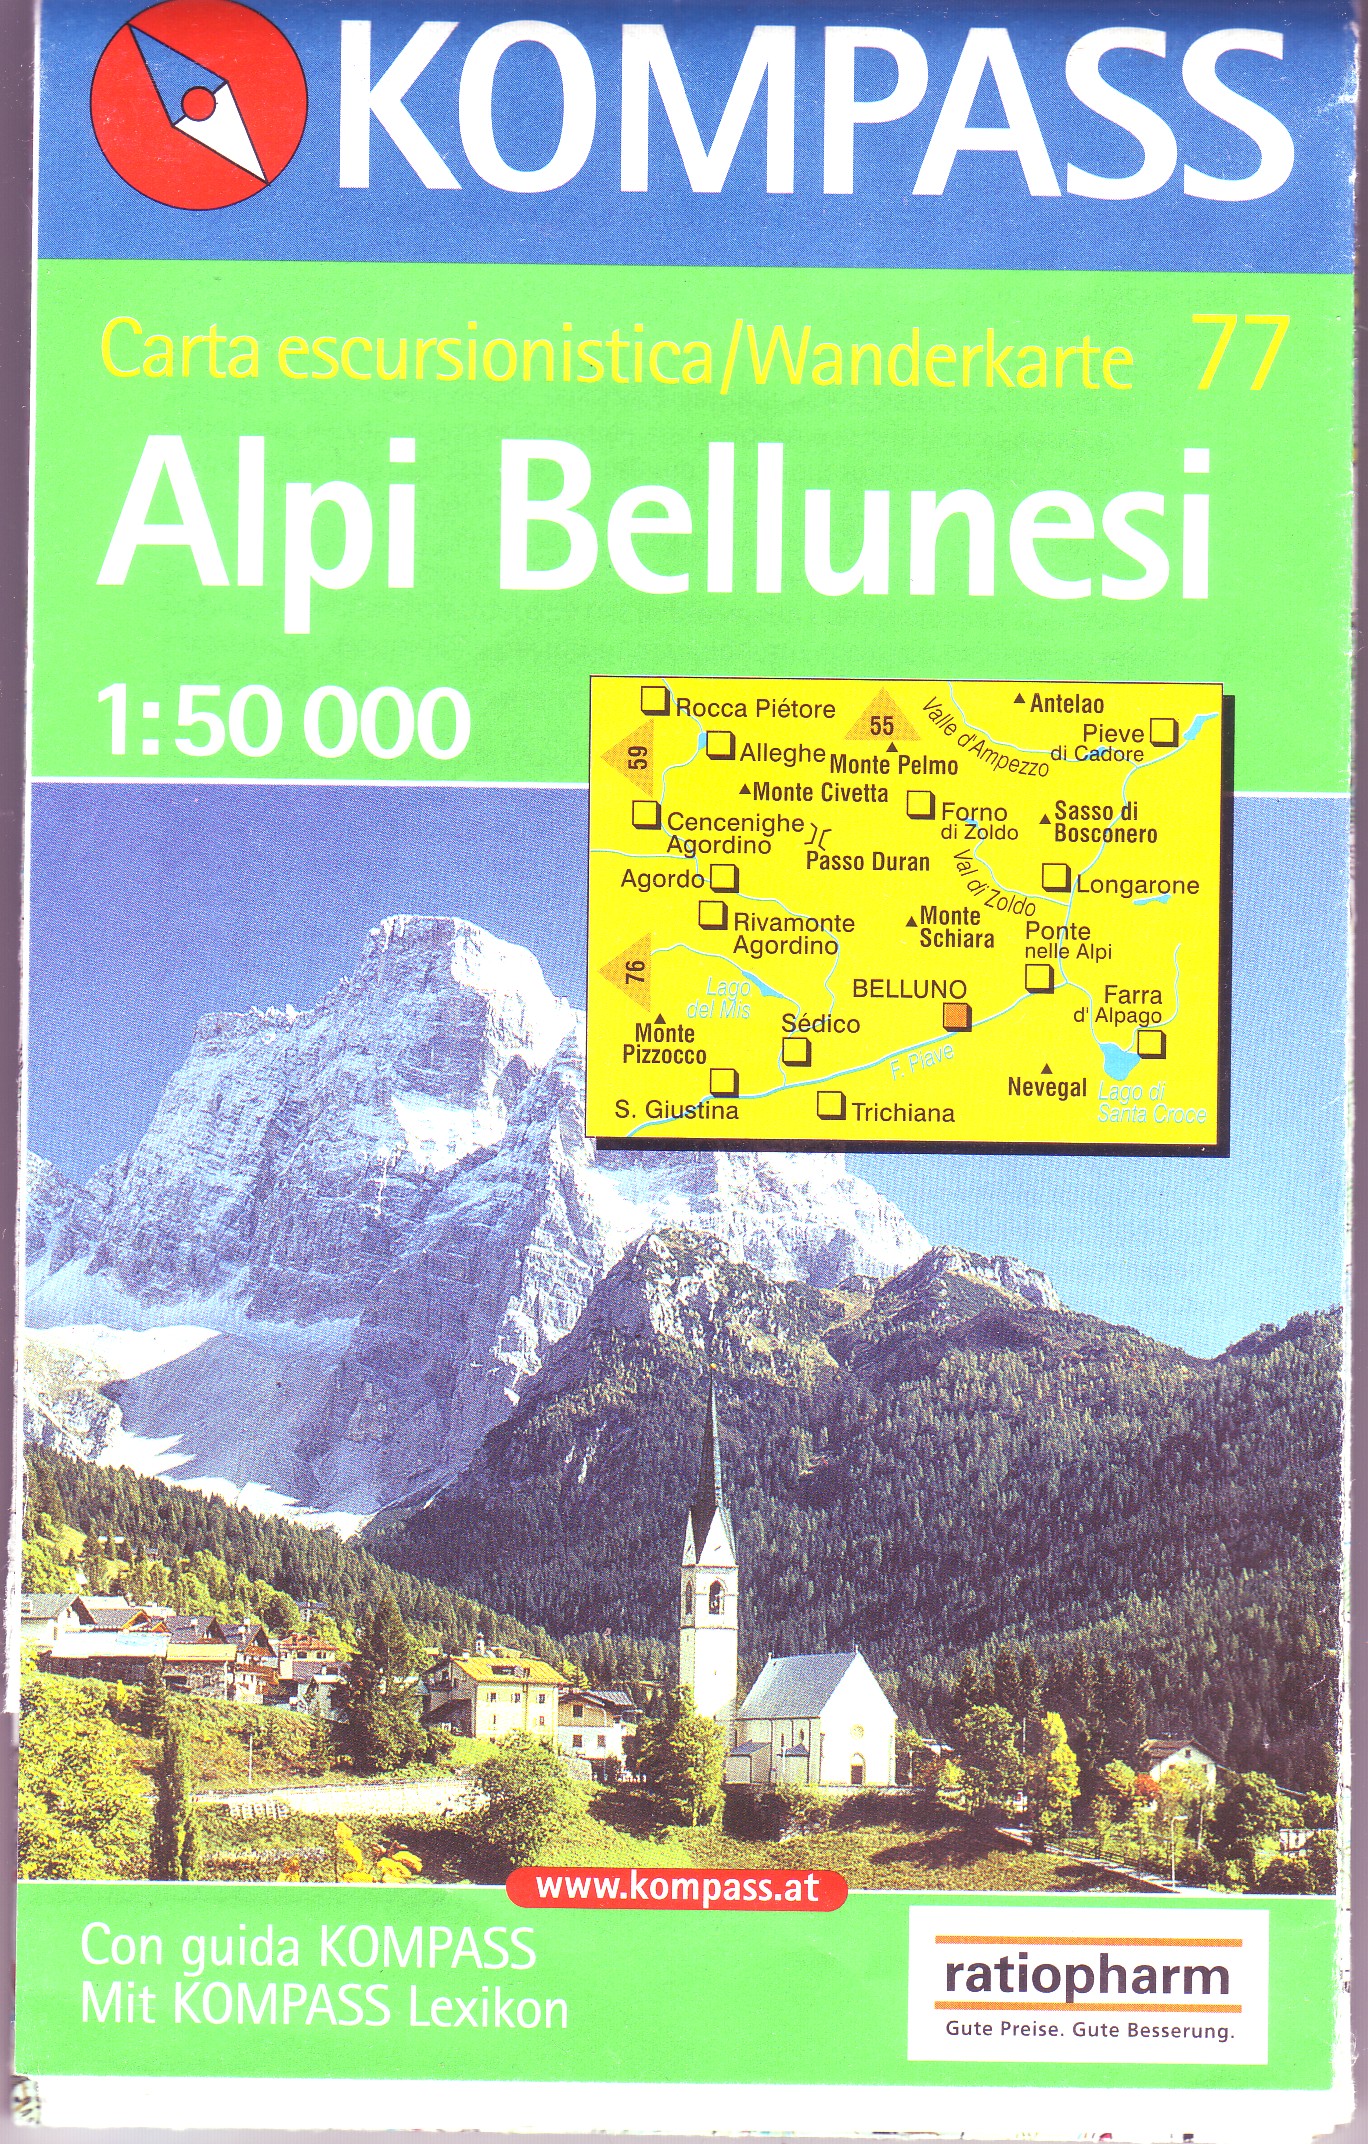 Kompass 77 Carta escursionistica/Wanderkarte Alpi Bellunesi